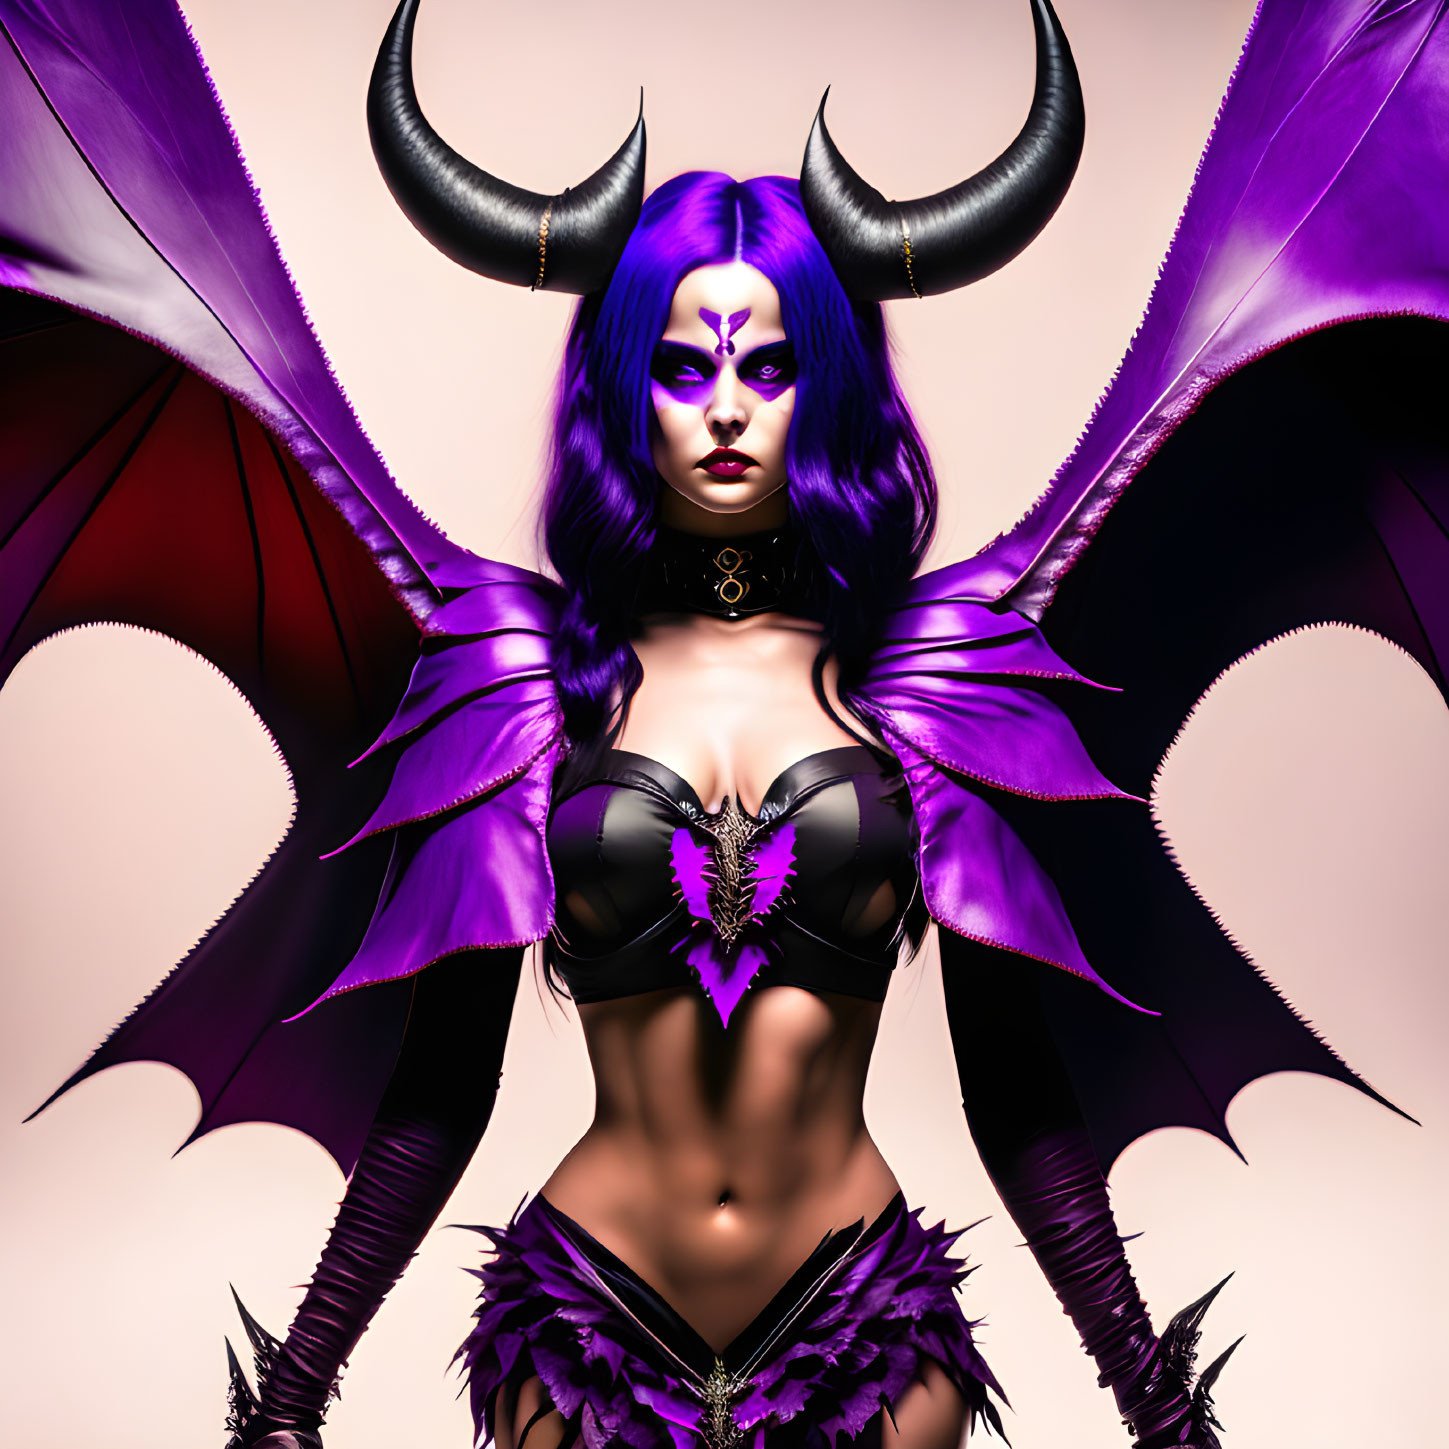 Purple-skinned demon female character in dark armor costume on pink background